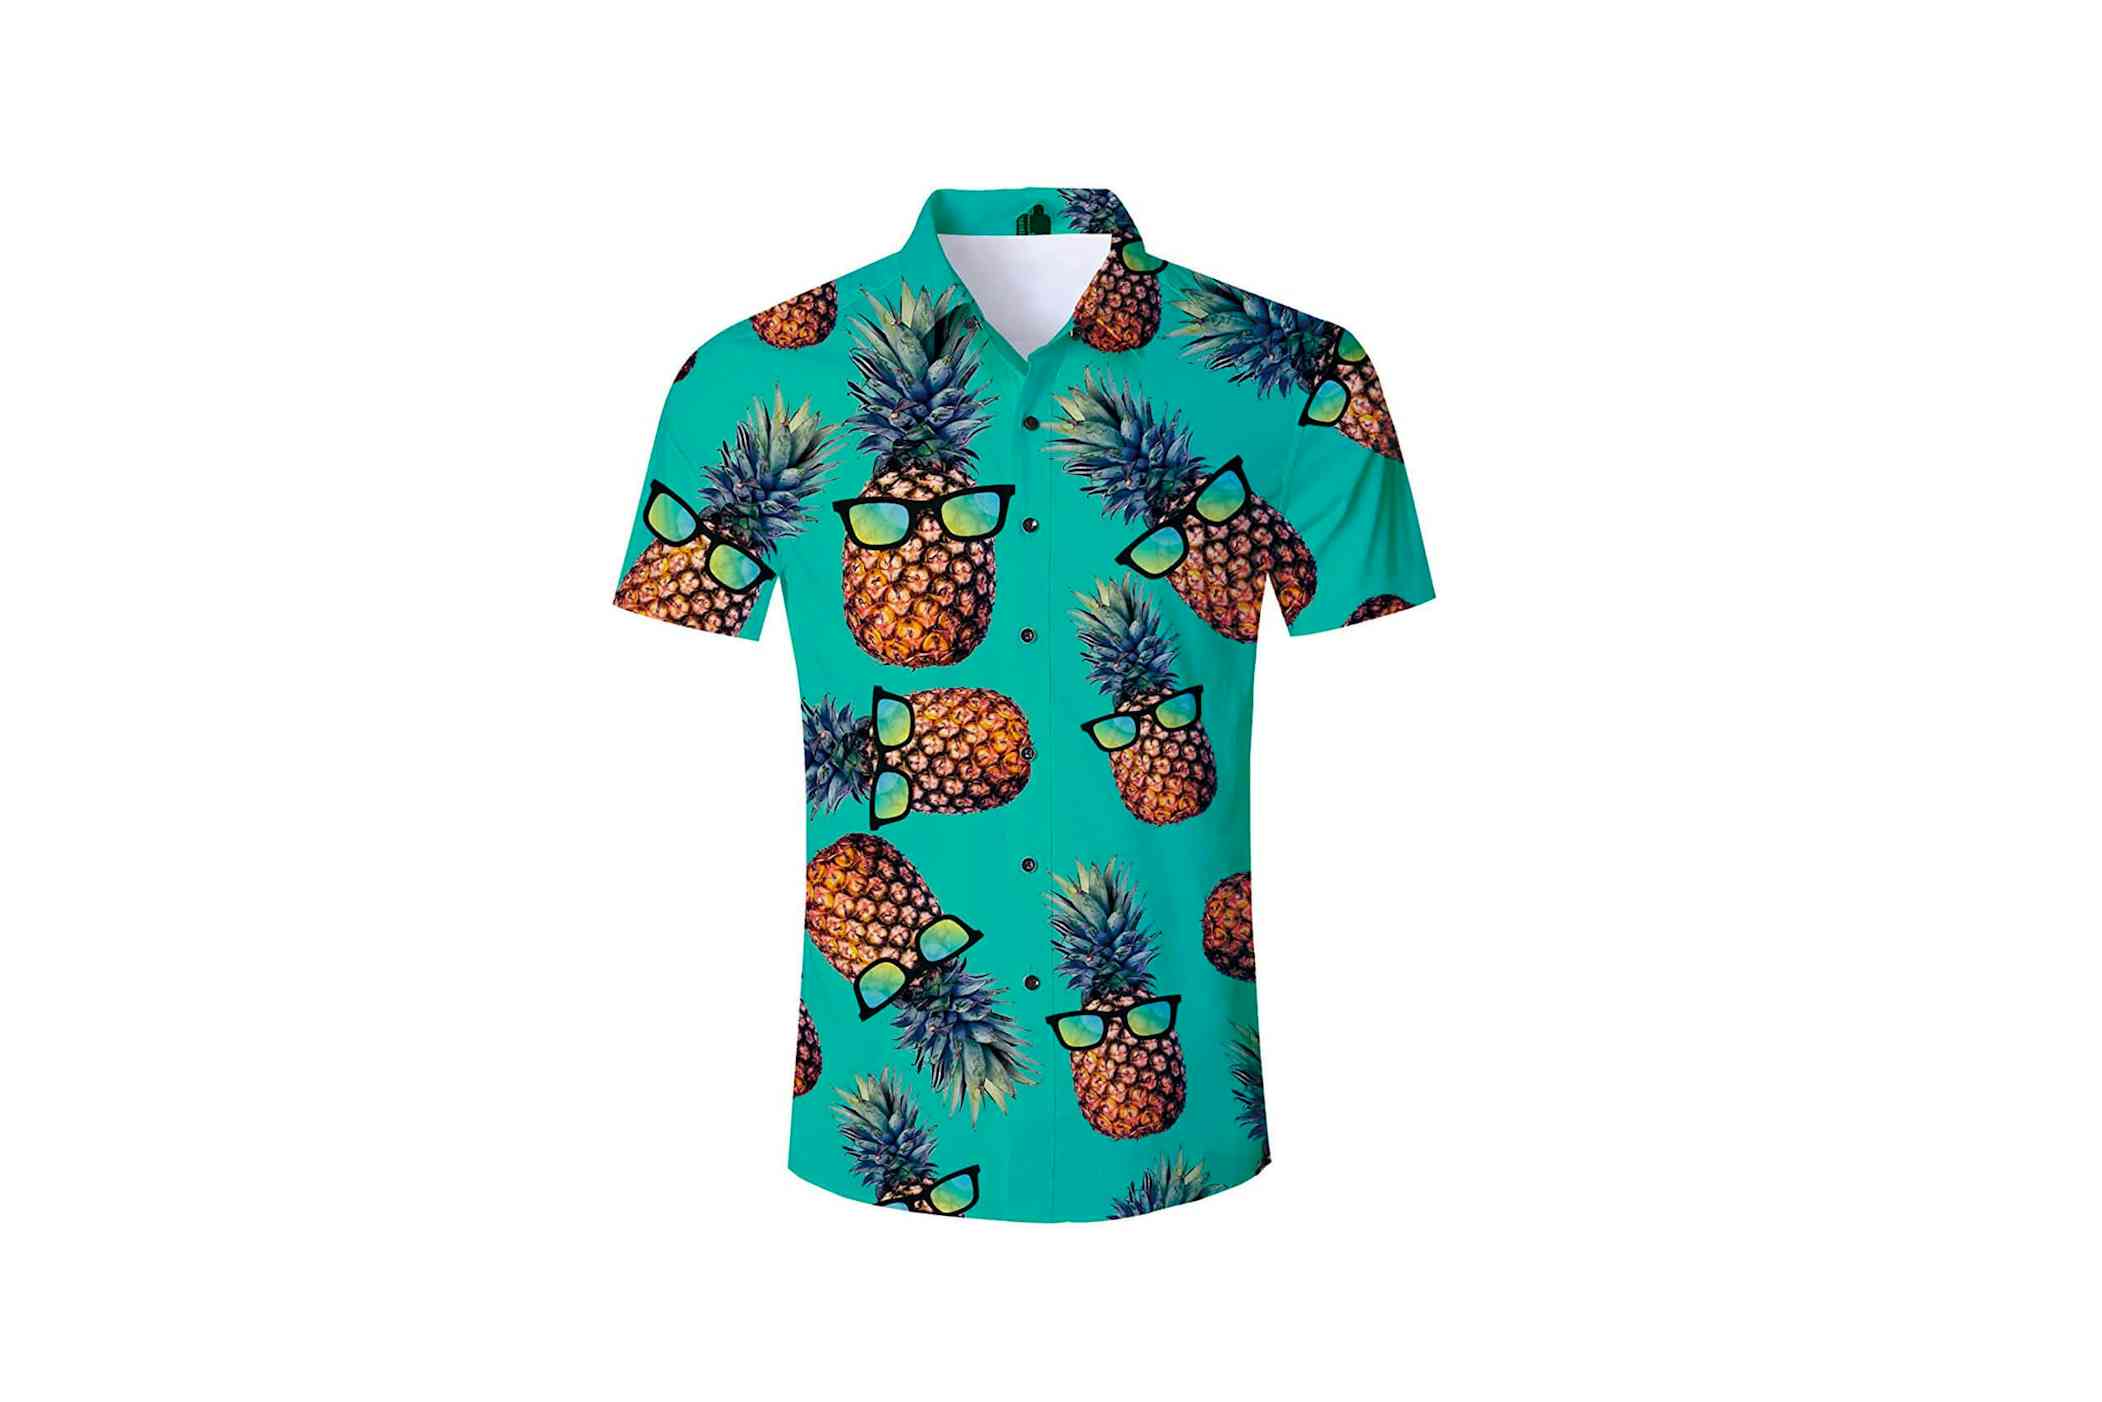 How to Wear A Hawaiian Shirt & Not Look Silly